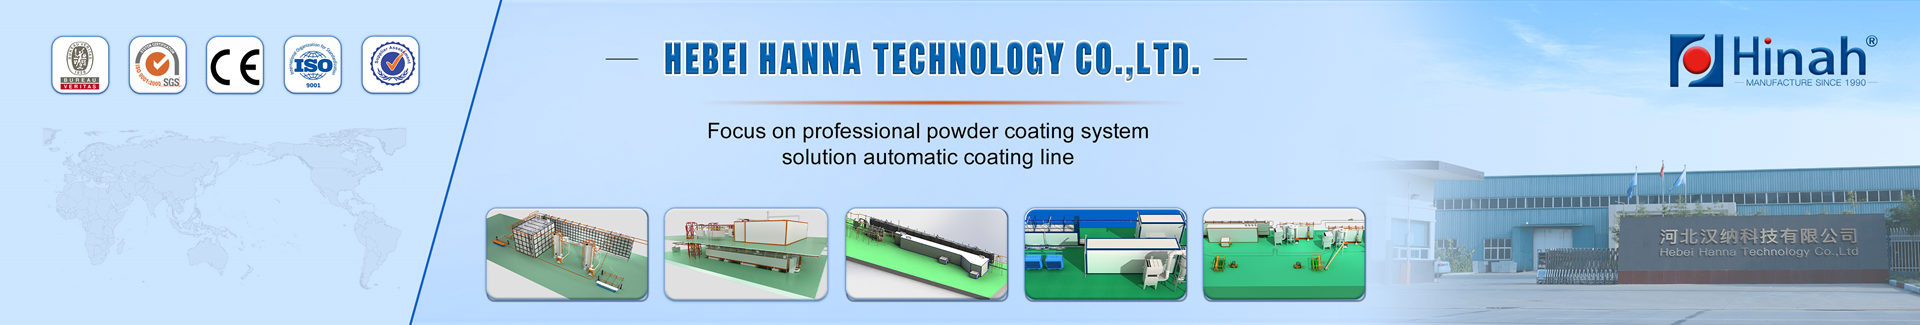 banner-industry powder coating equipment manufacturer-2 